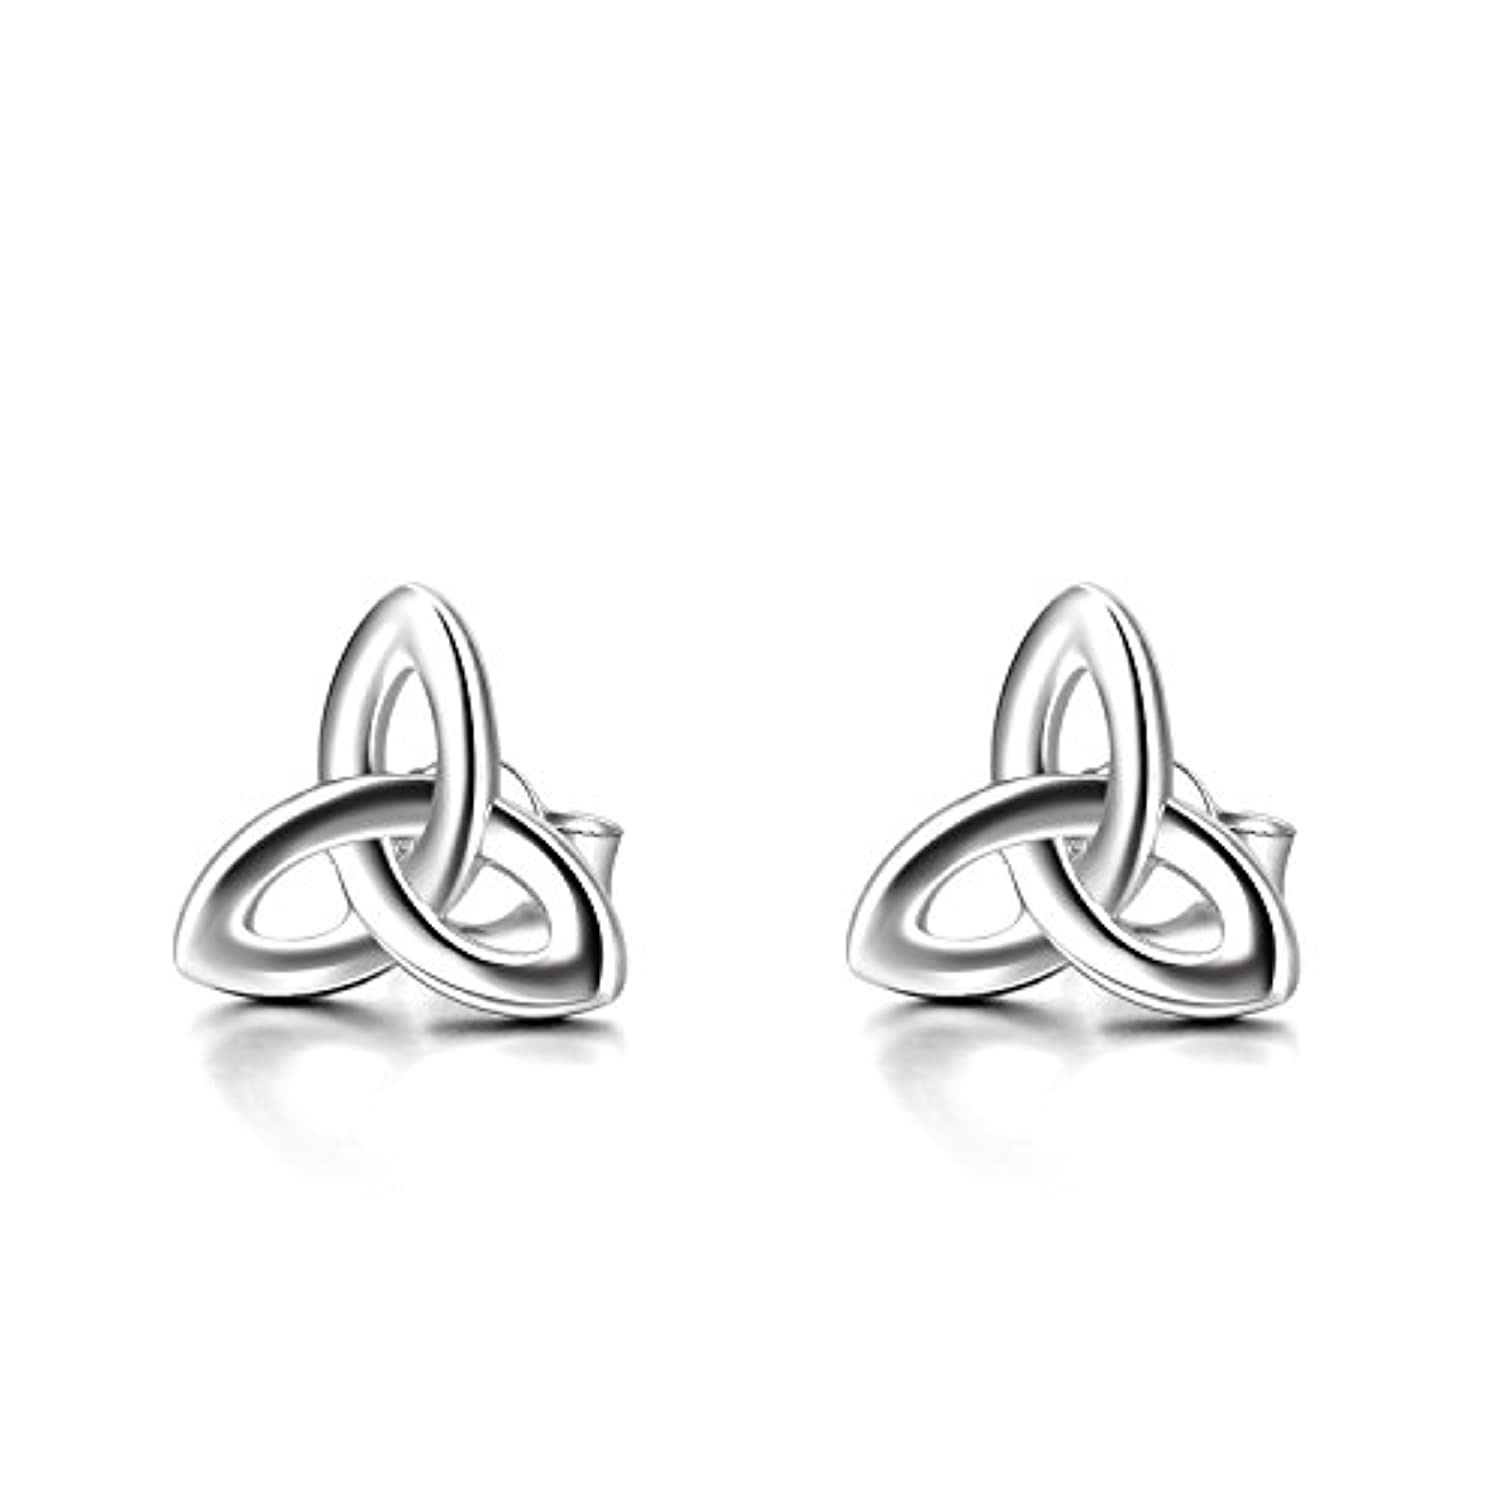 S925 Sterling Silver Irish Celtic Trinity Knot Stud Earrings for Women Teen Girls Birthday Gift